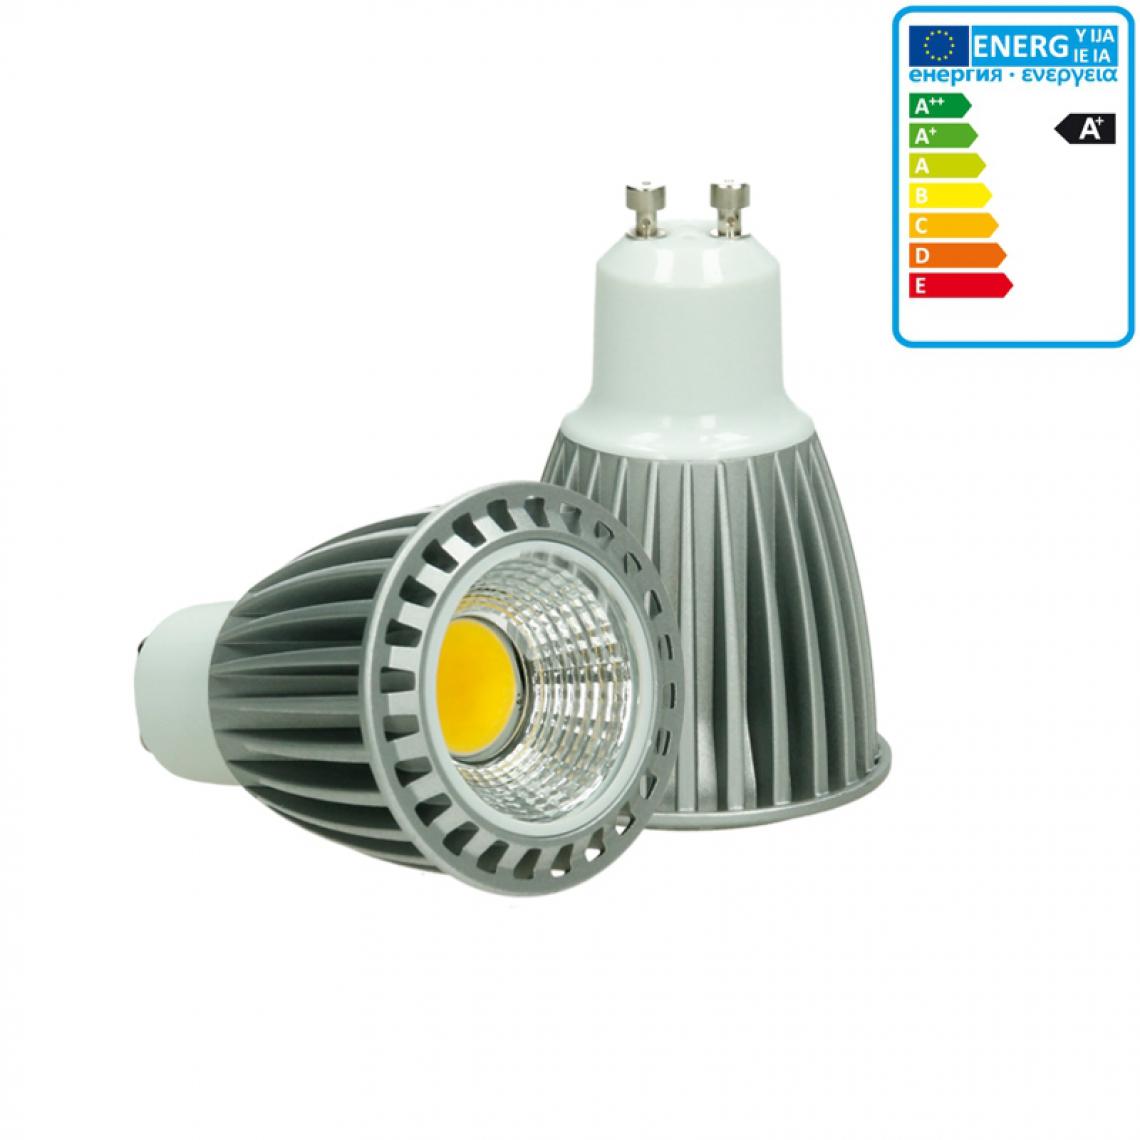 Ecd Germany - ECD Germany LED COB GU10 Spot Lampe Ampoule 9W Dimmable Blanc Chaud - Ampoules LED